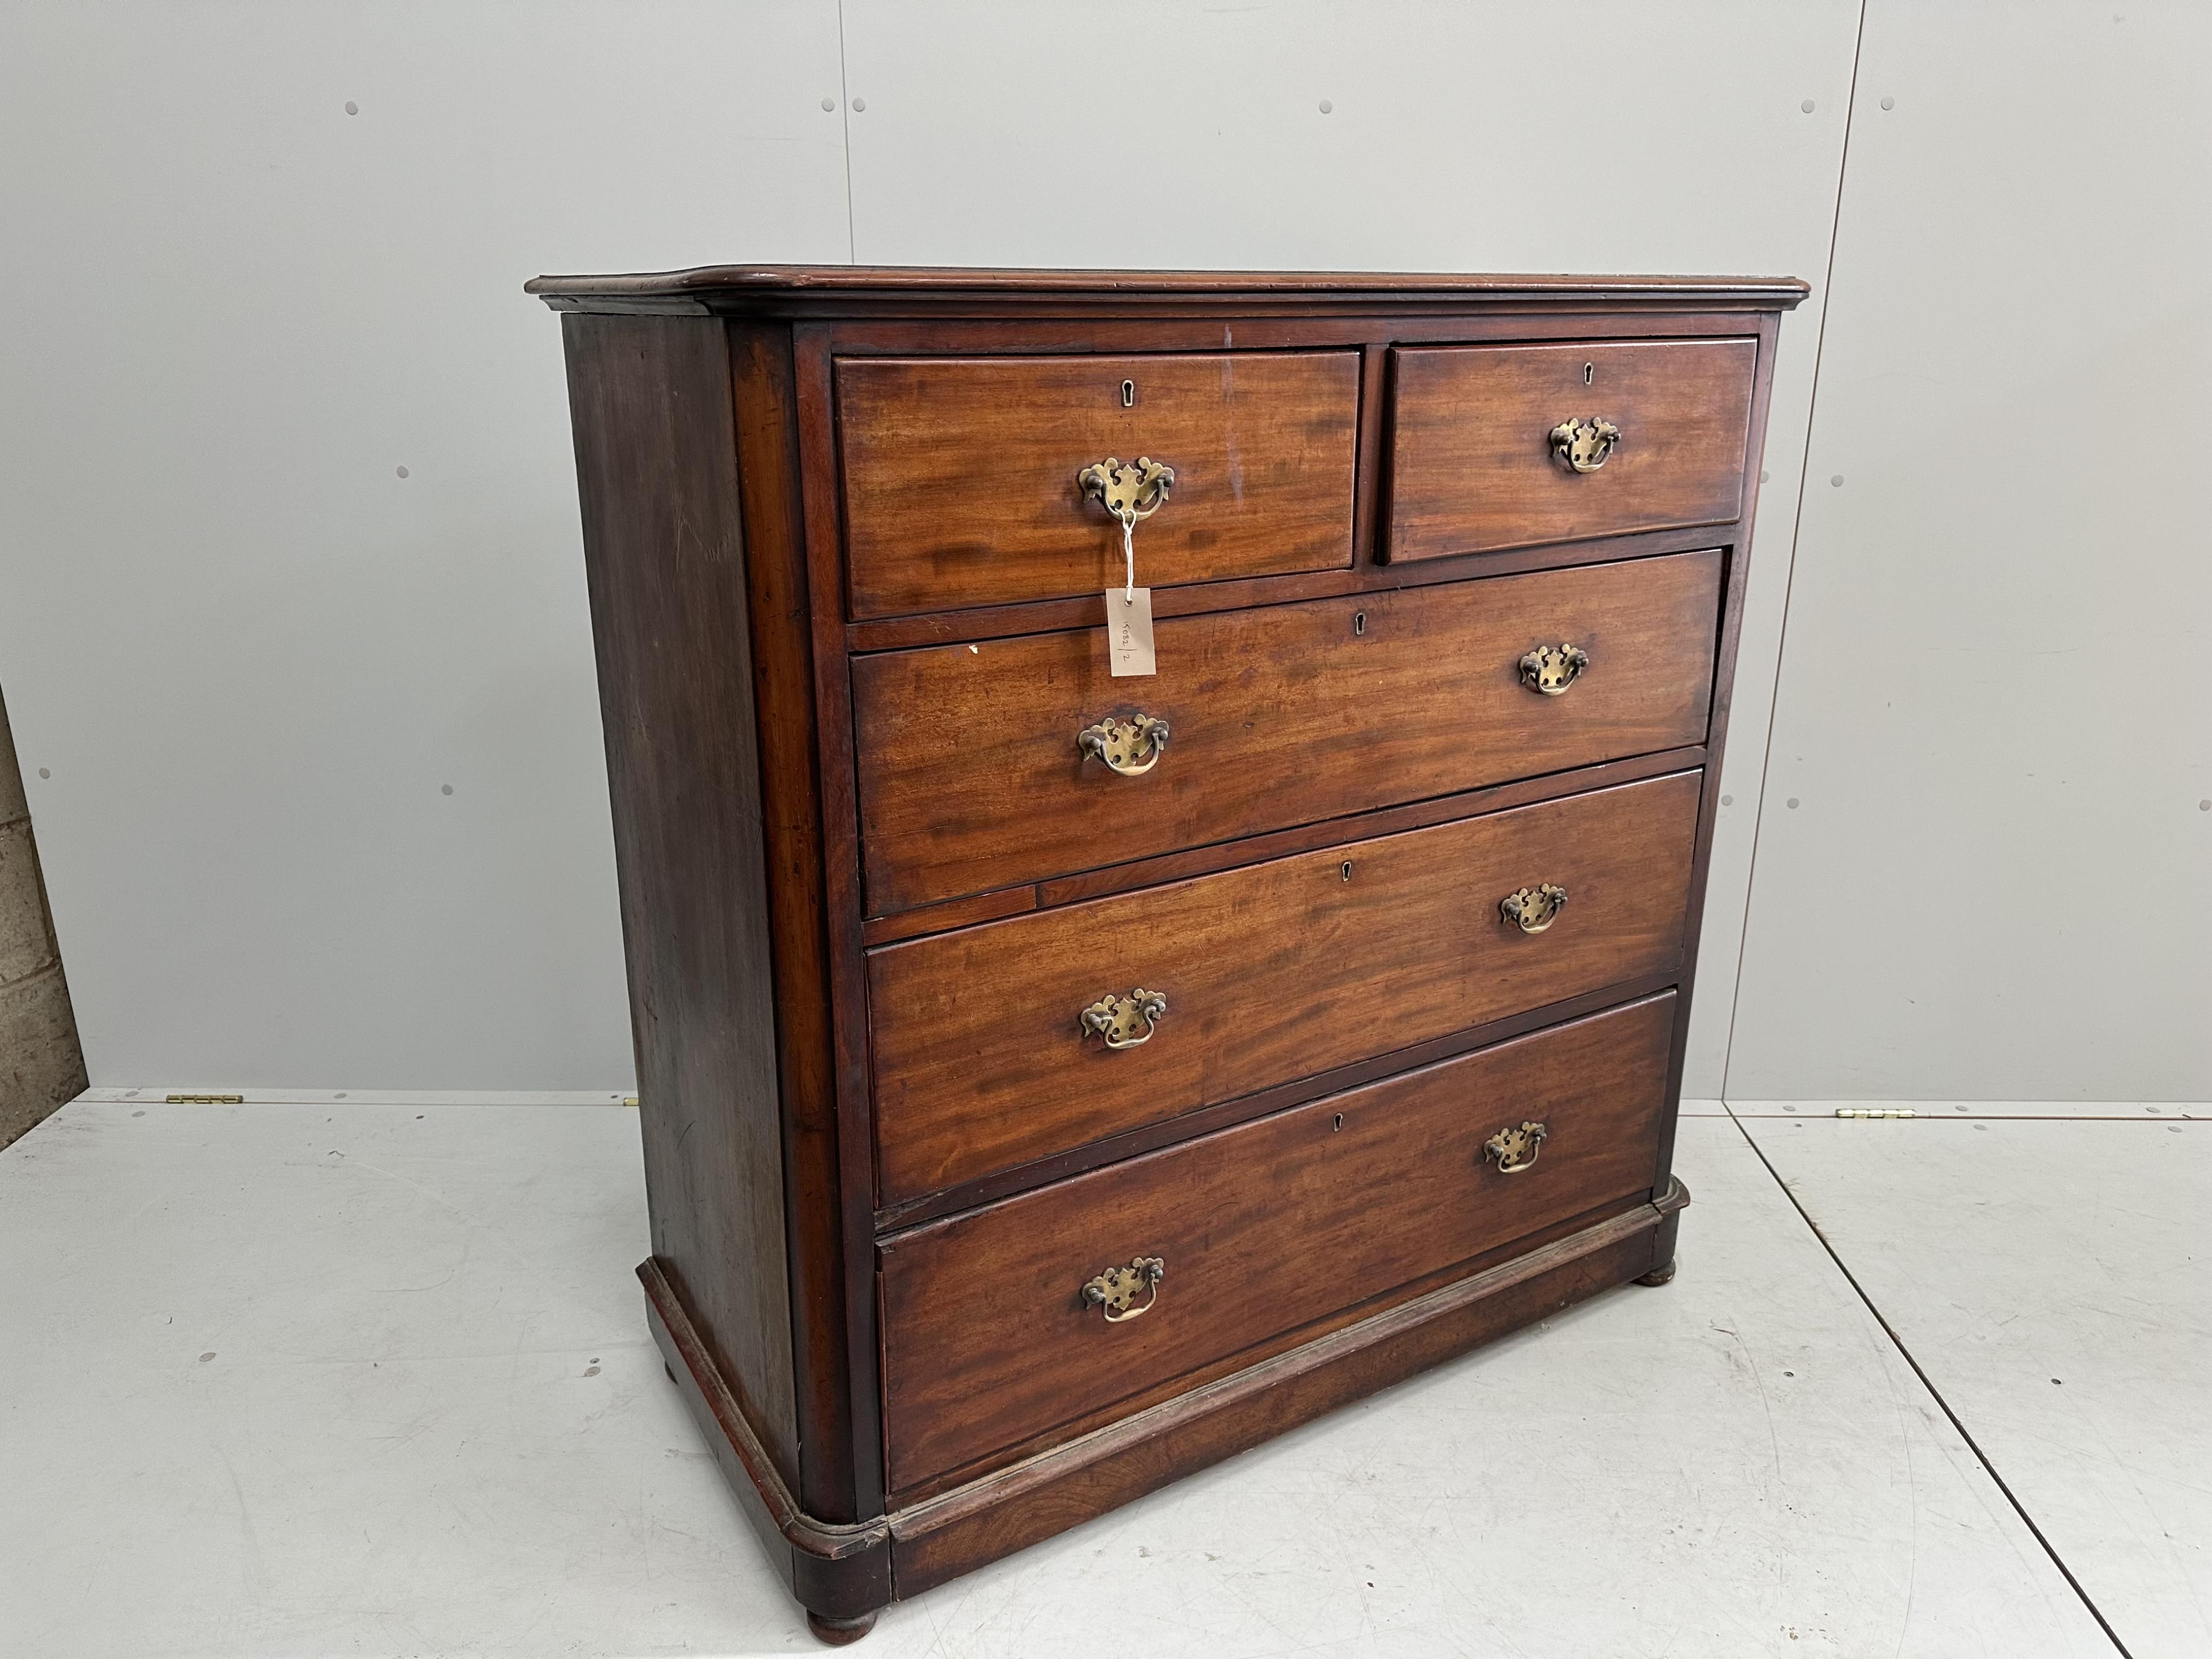 A Victorian mahogany chest, width 113cm, depth 52cm, height 113cm. Condition - fair